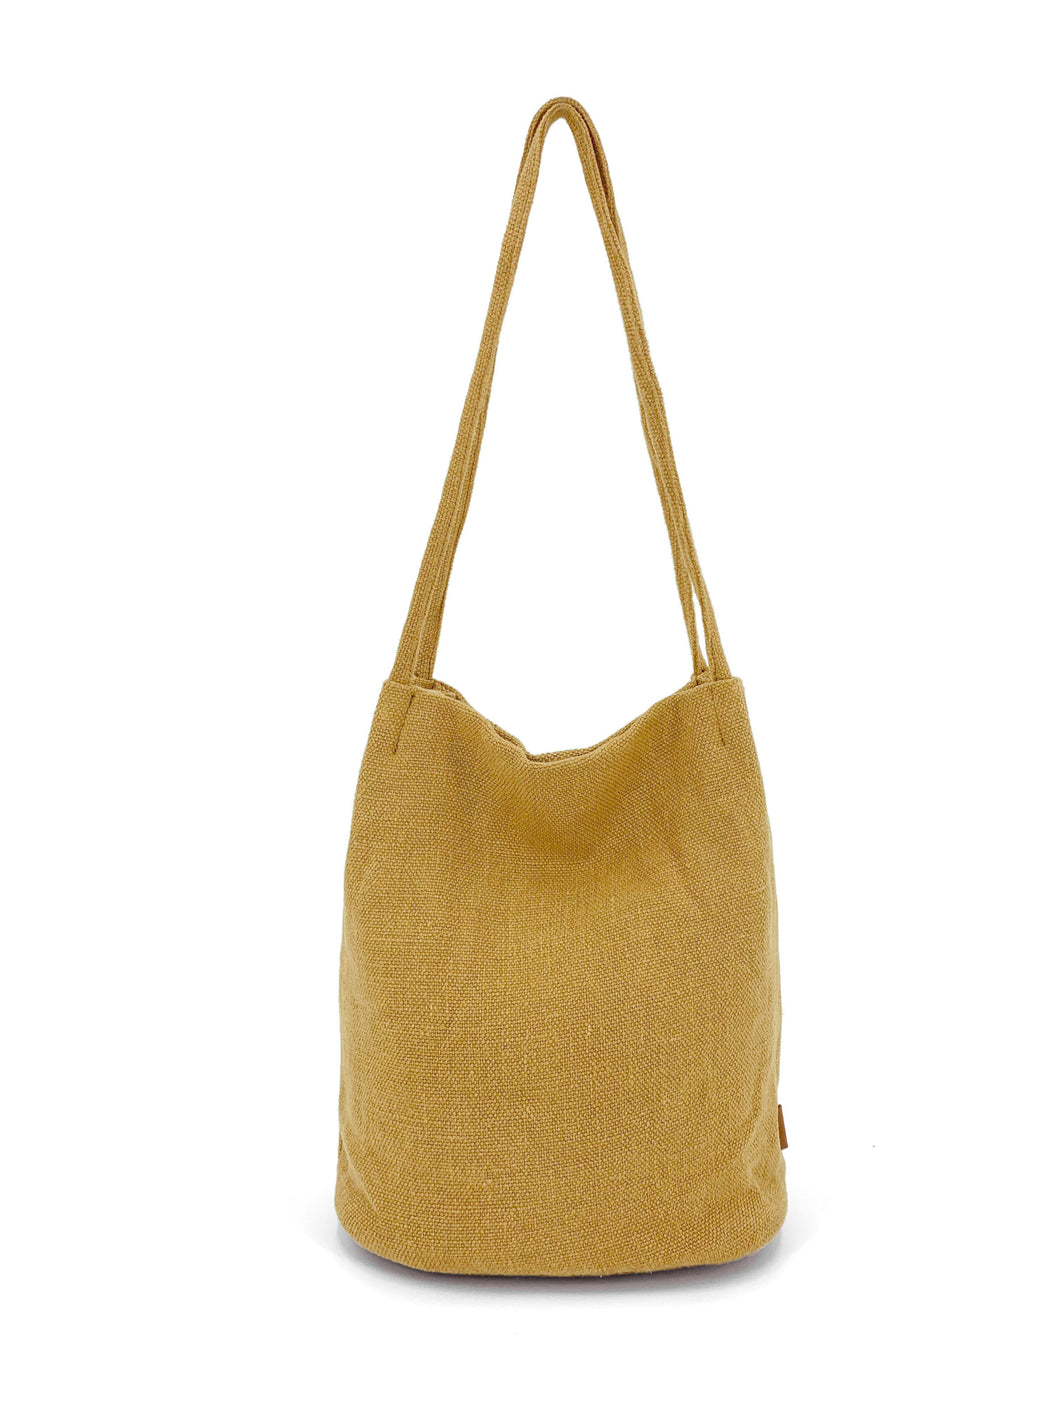 Natural Long Handle Bag - Mustard